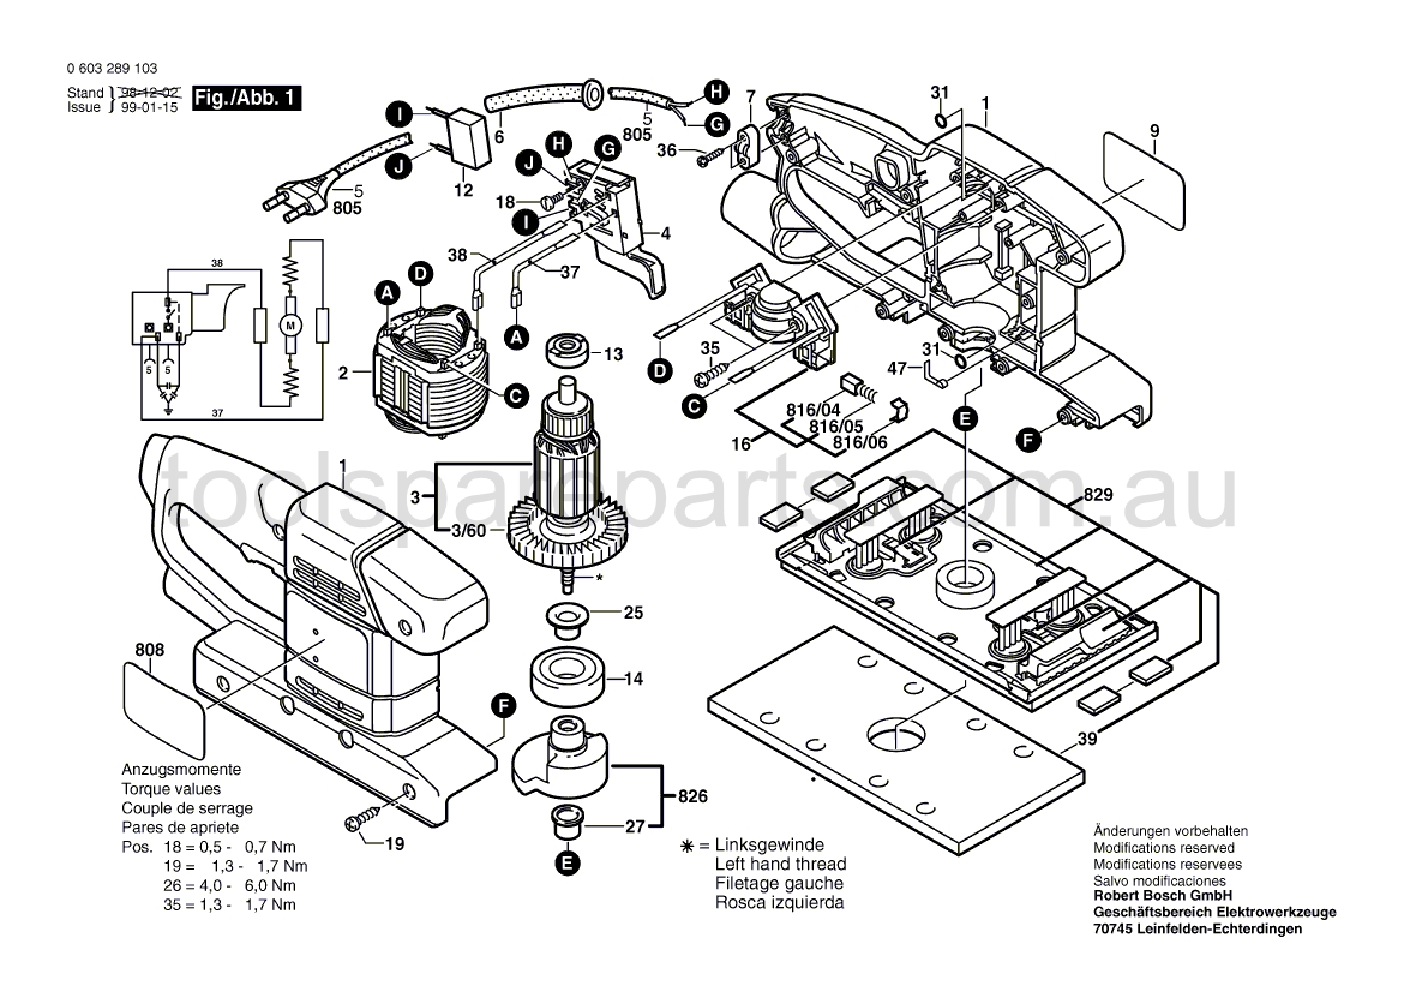 Bosch PSS 23 0603289137  Diagram 1